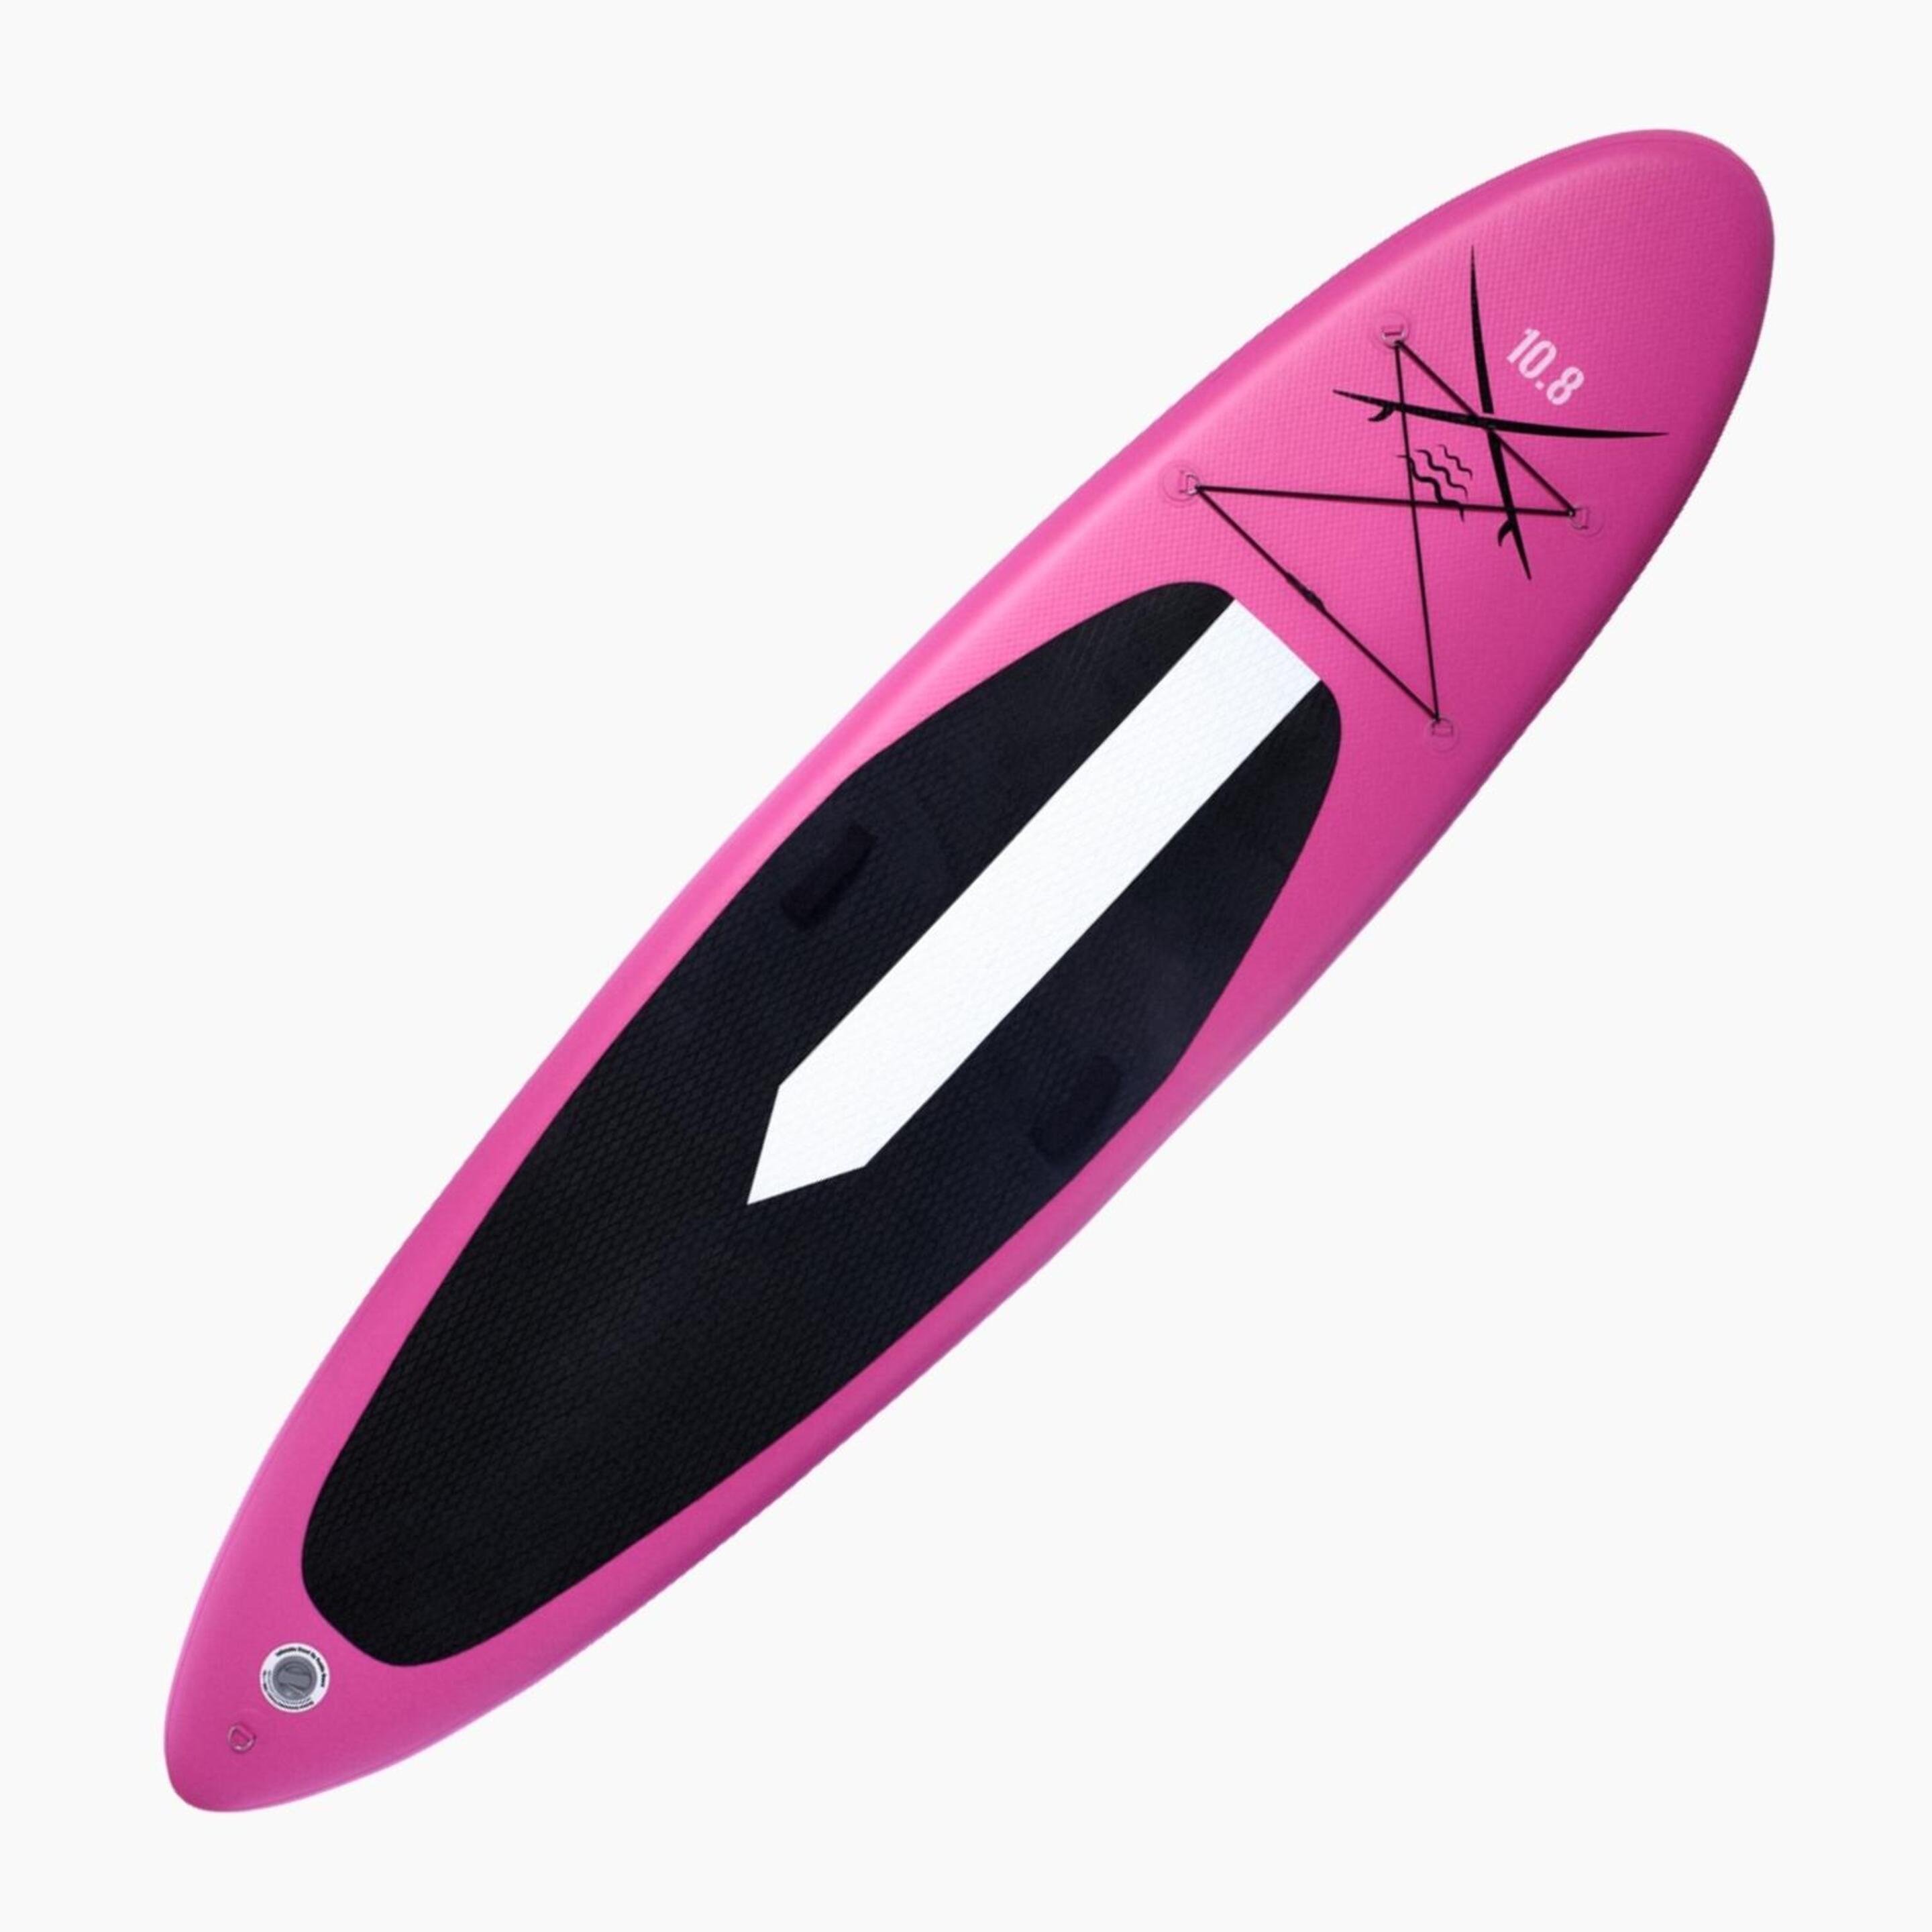 Tabla De Paddle Surf Suprfit Hinchable Set Lailani - Blanco/Rosa - Tabla De Paddle Surf Hinchable  MKP